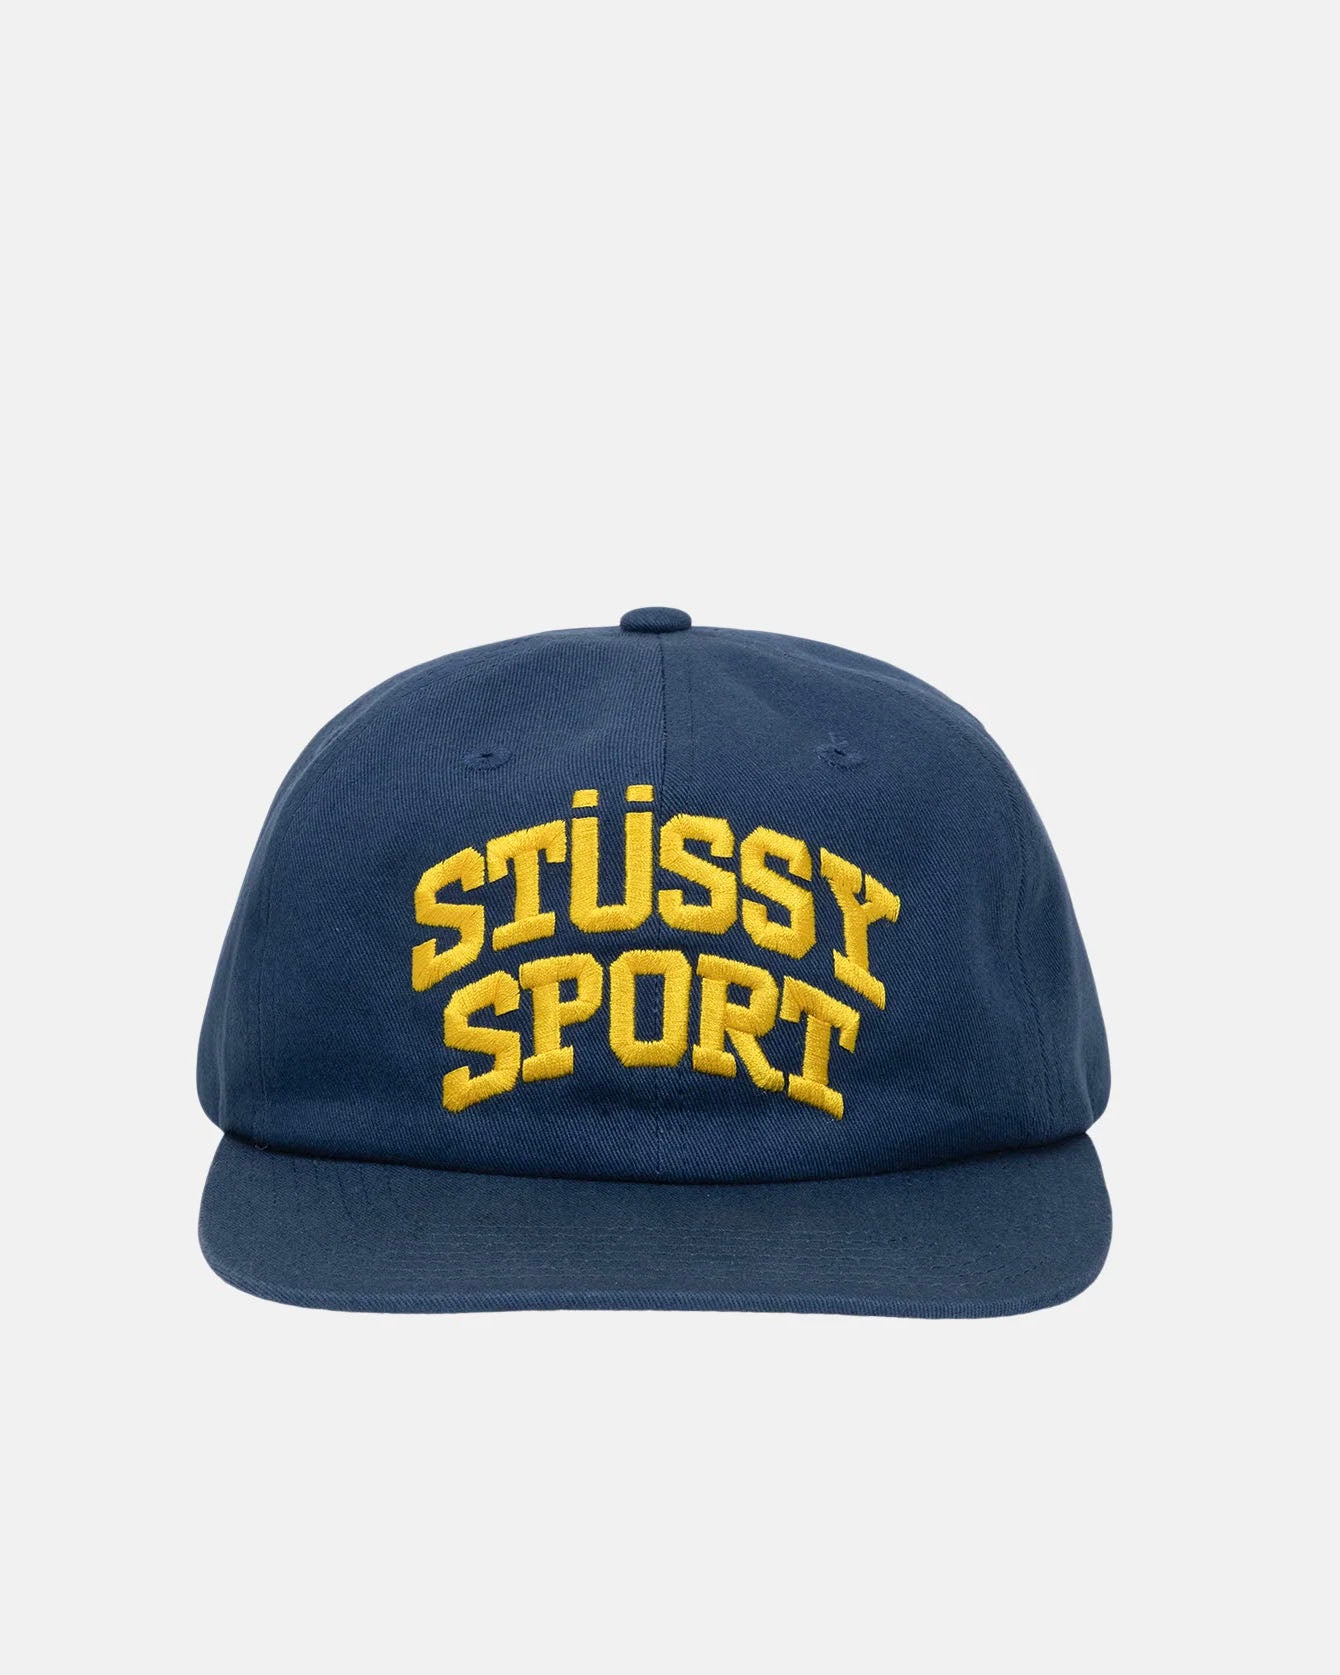 Stussy Sport Cap Navy